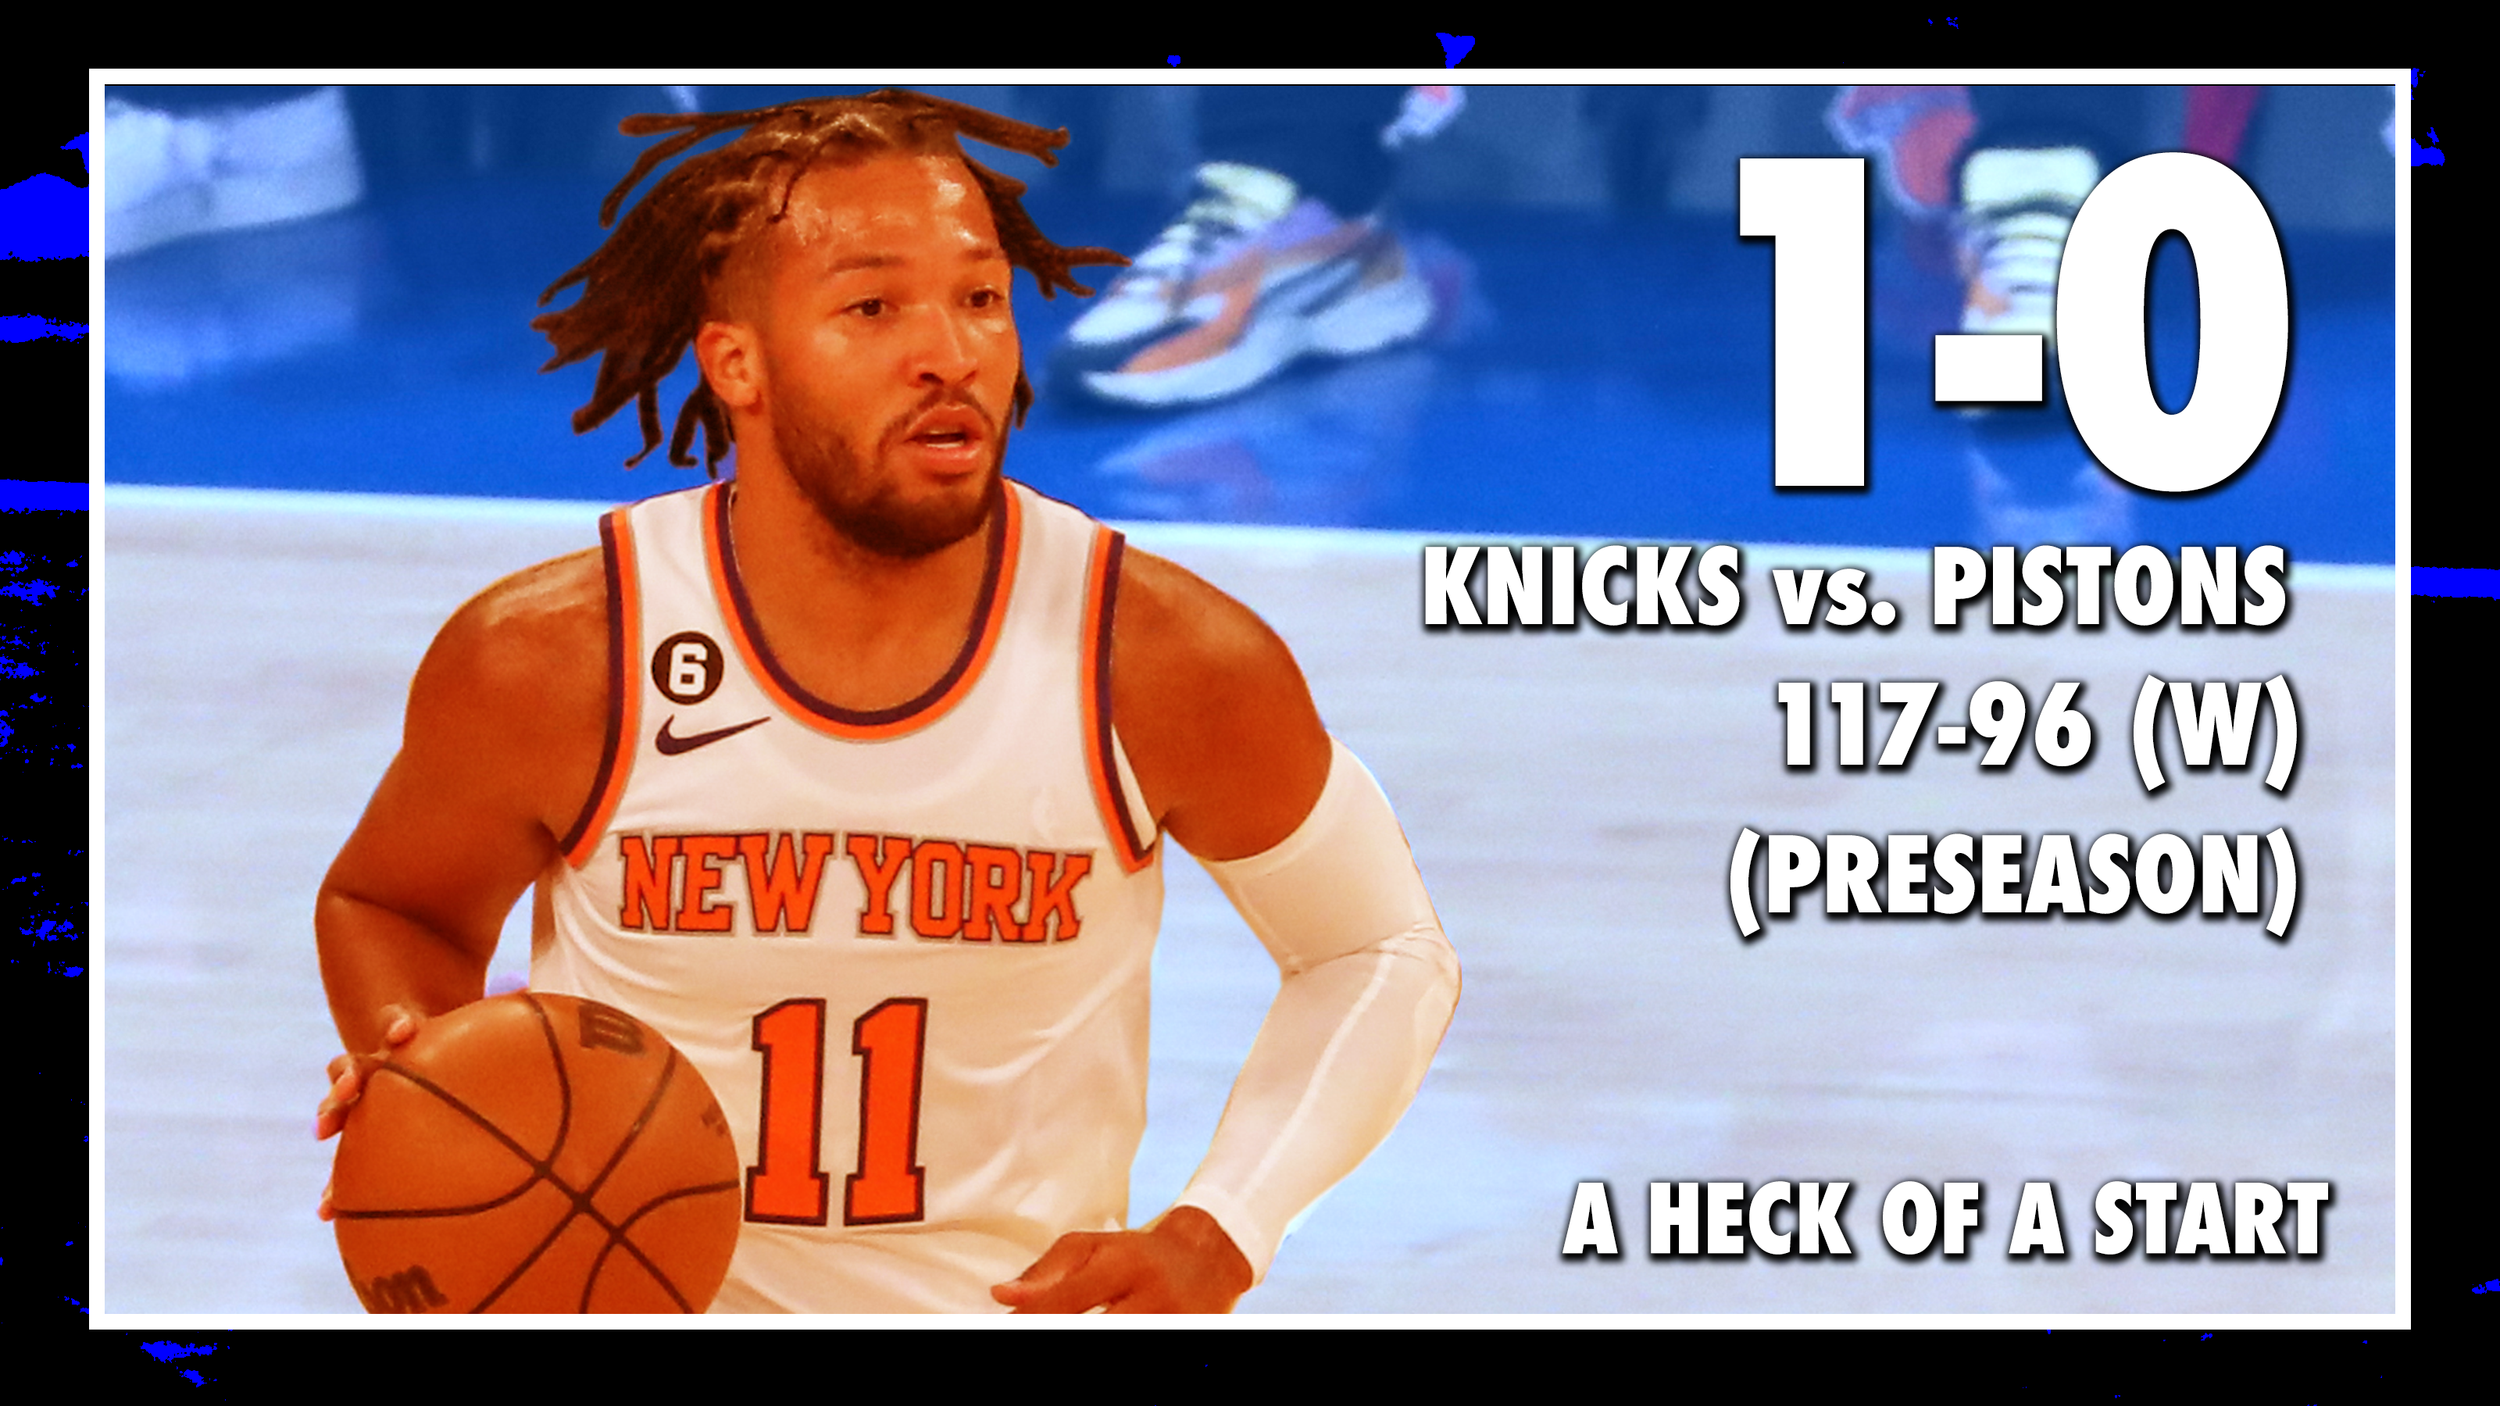 NBA_ Jersey New''York''Knicks''Men 8 33 RJ Barrett Julius Randle